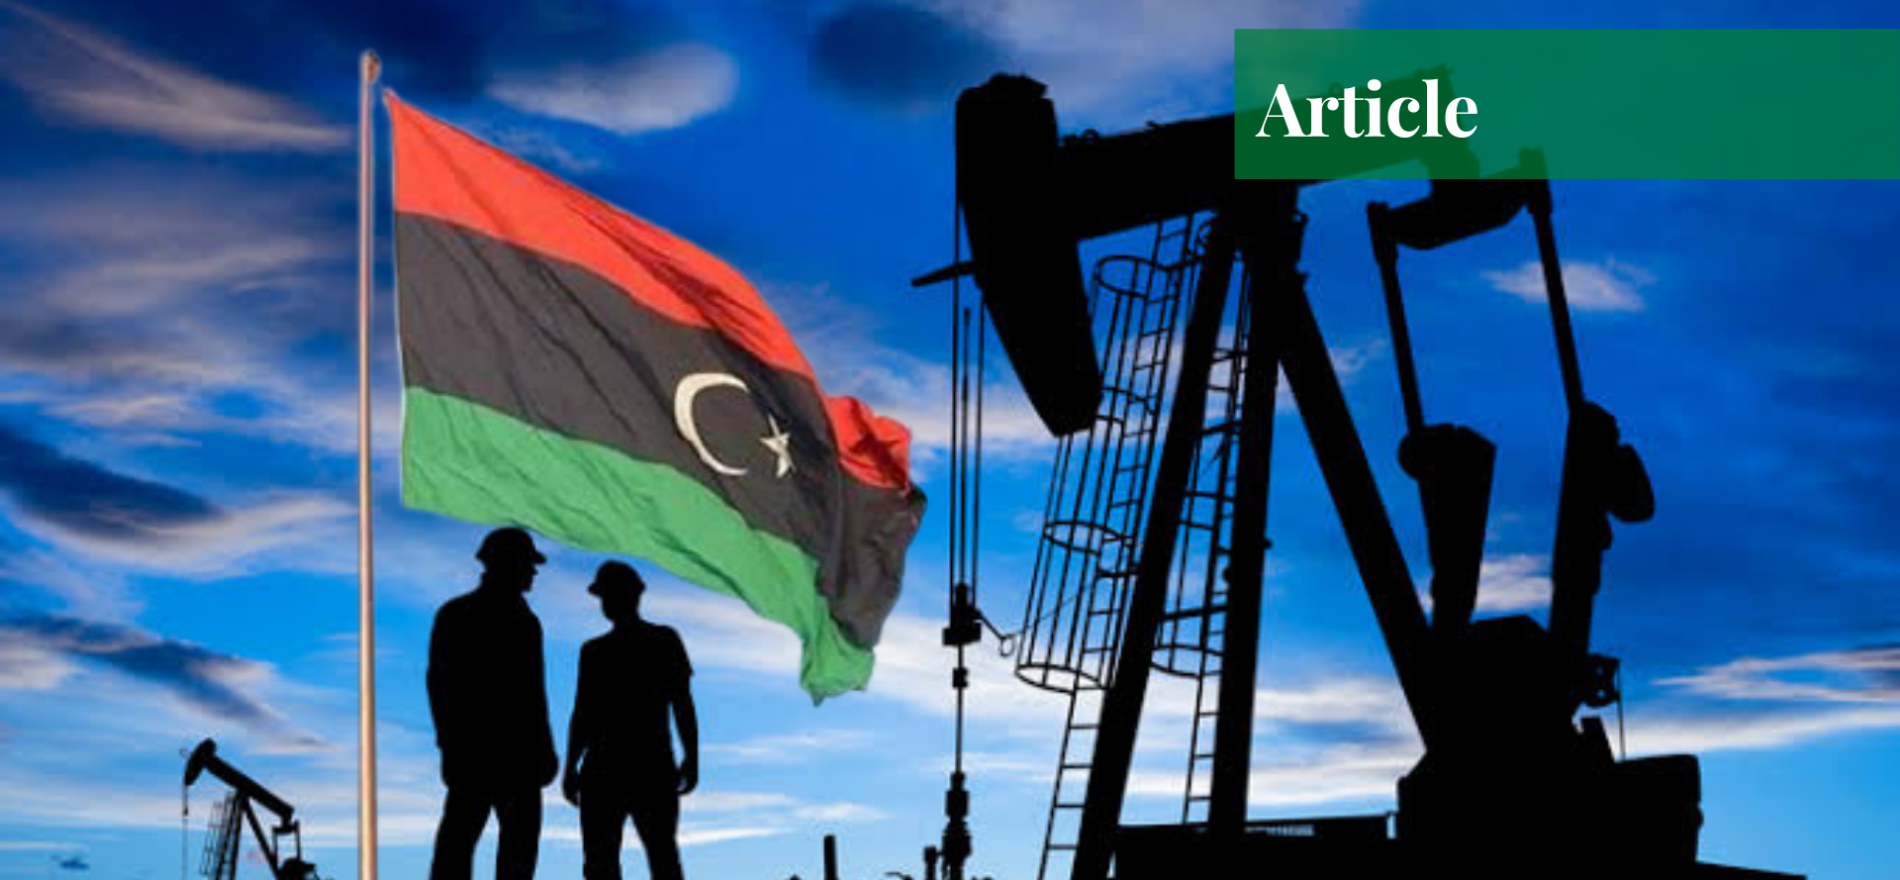 United States' Involvement in Libya